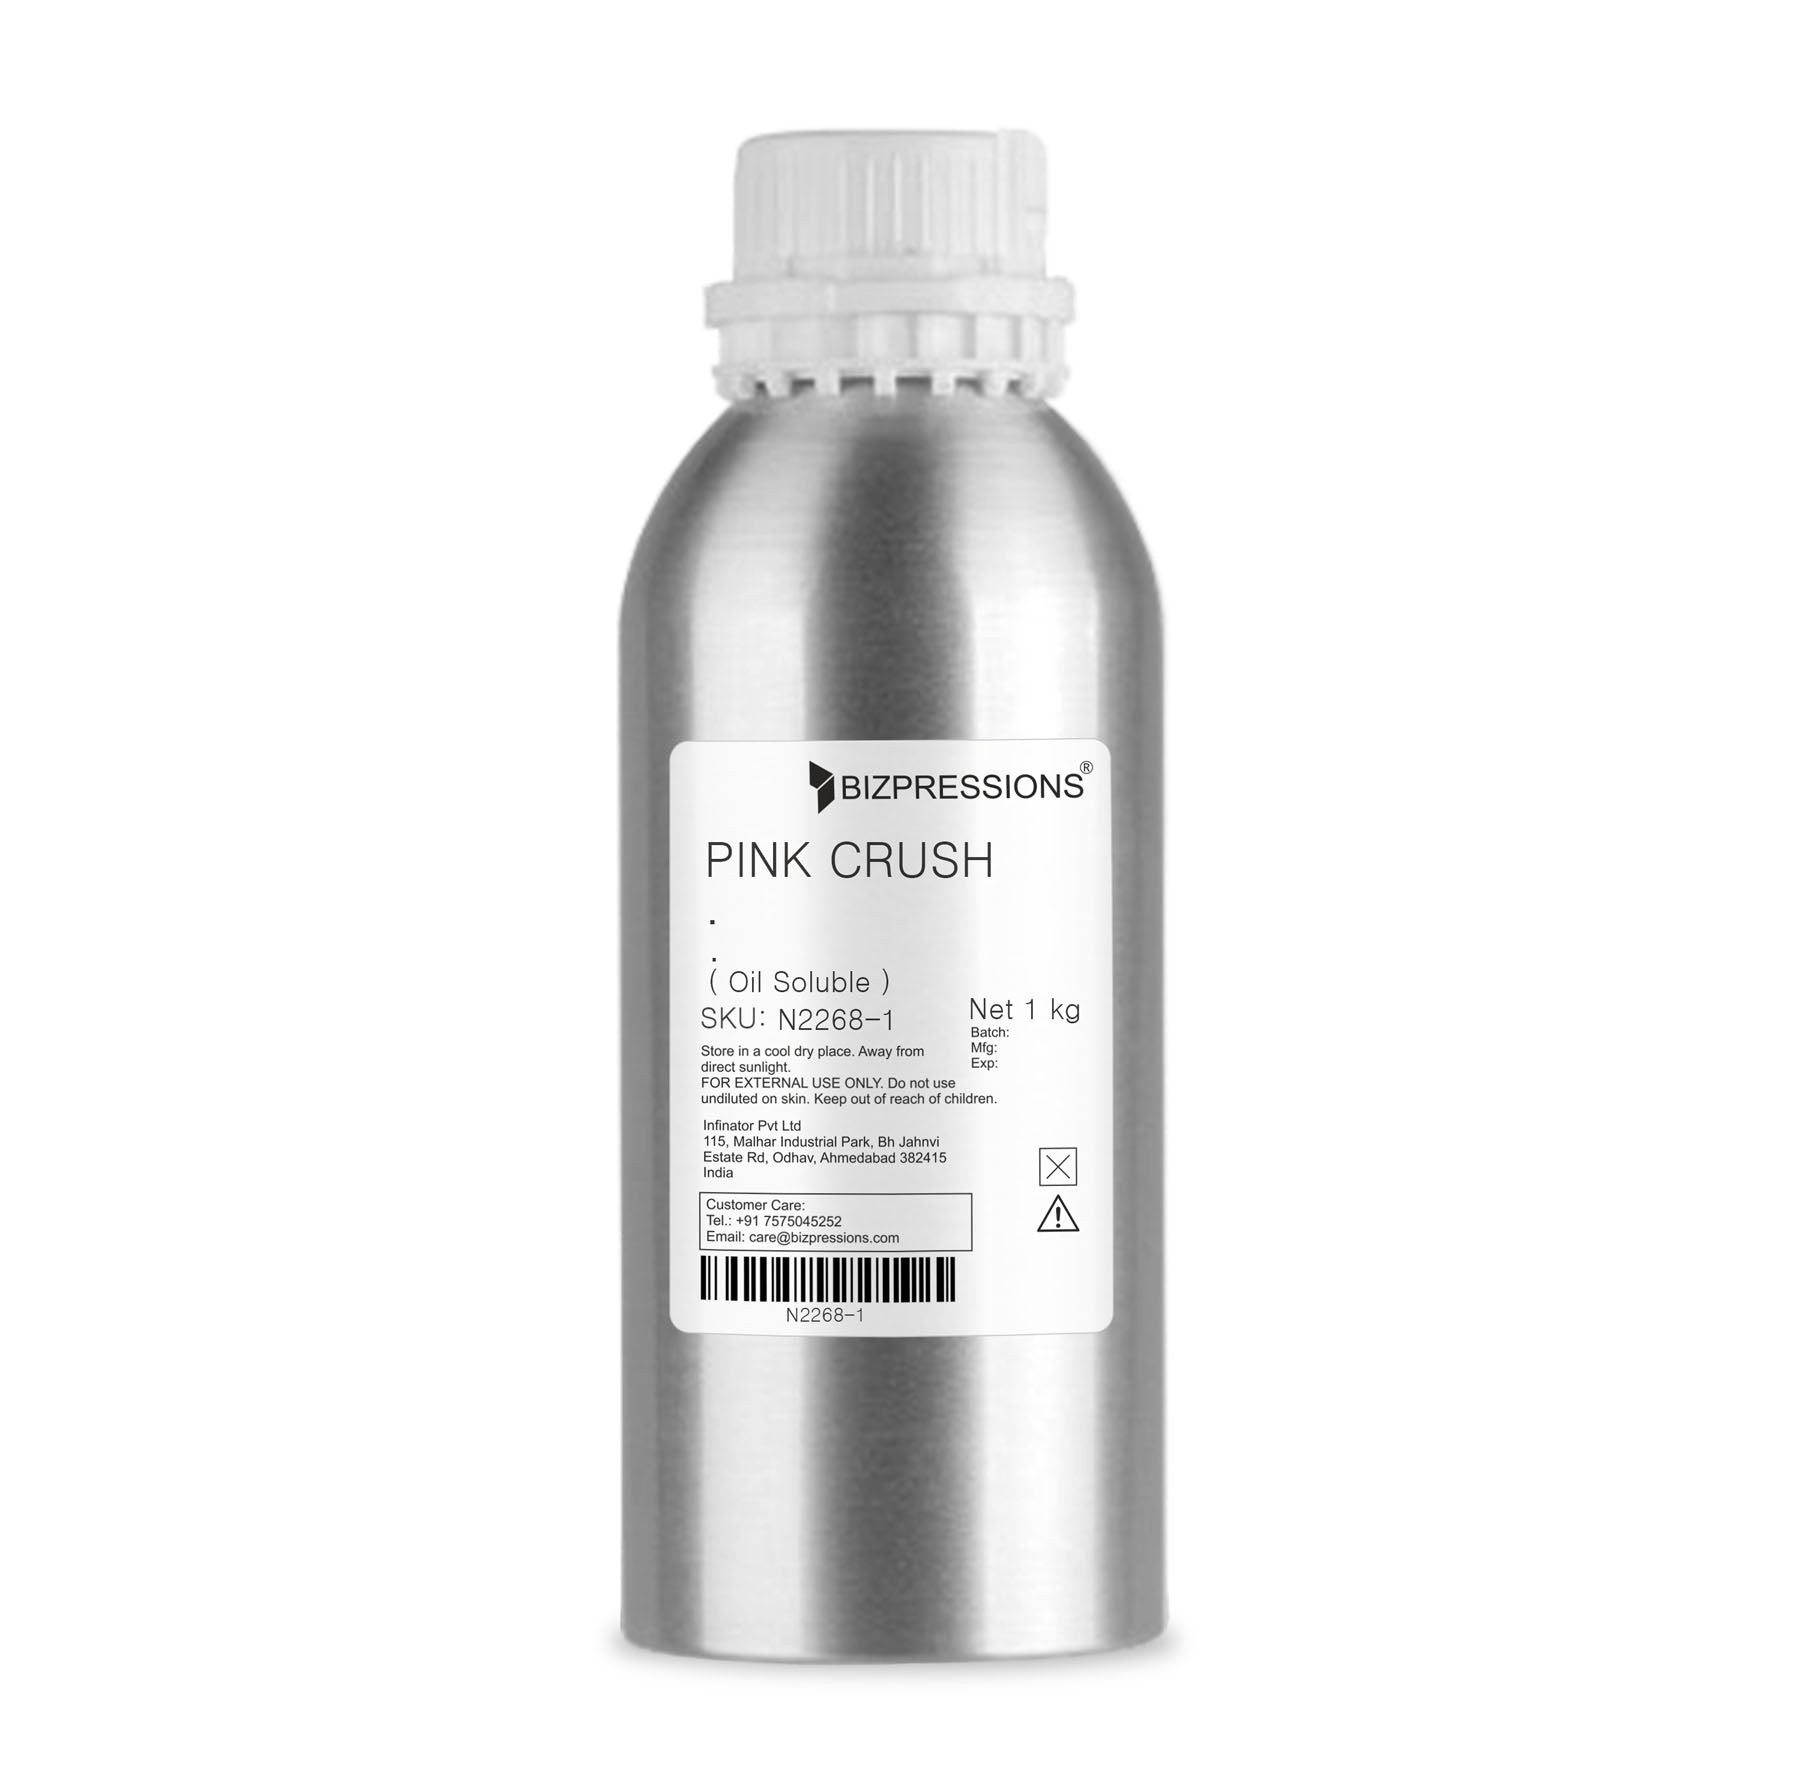 PINK CRUSH - Fragrance ( Oil Soluble ) - 1 kg